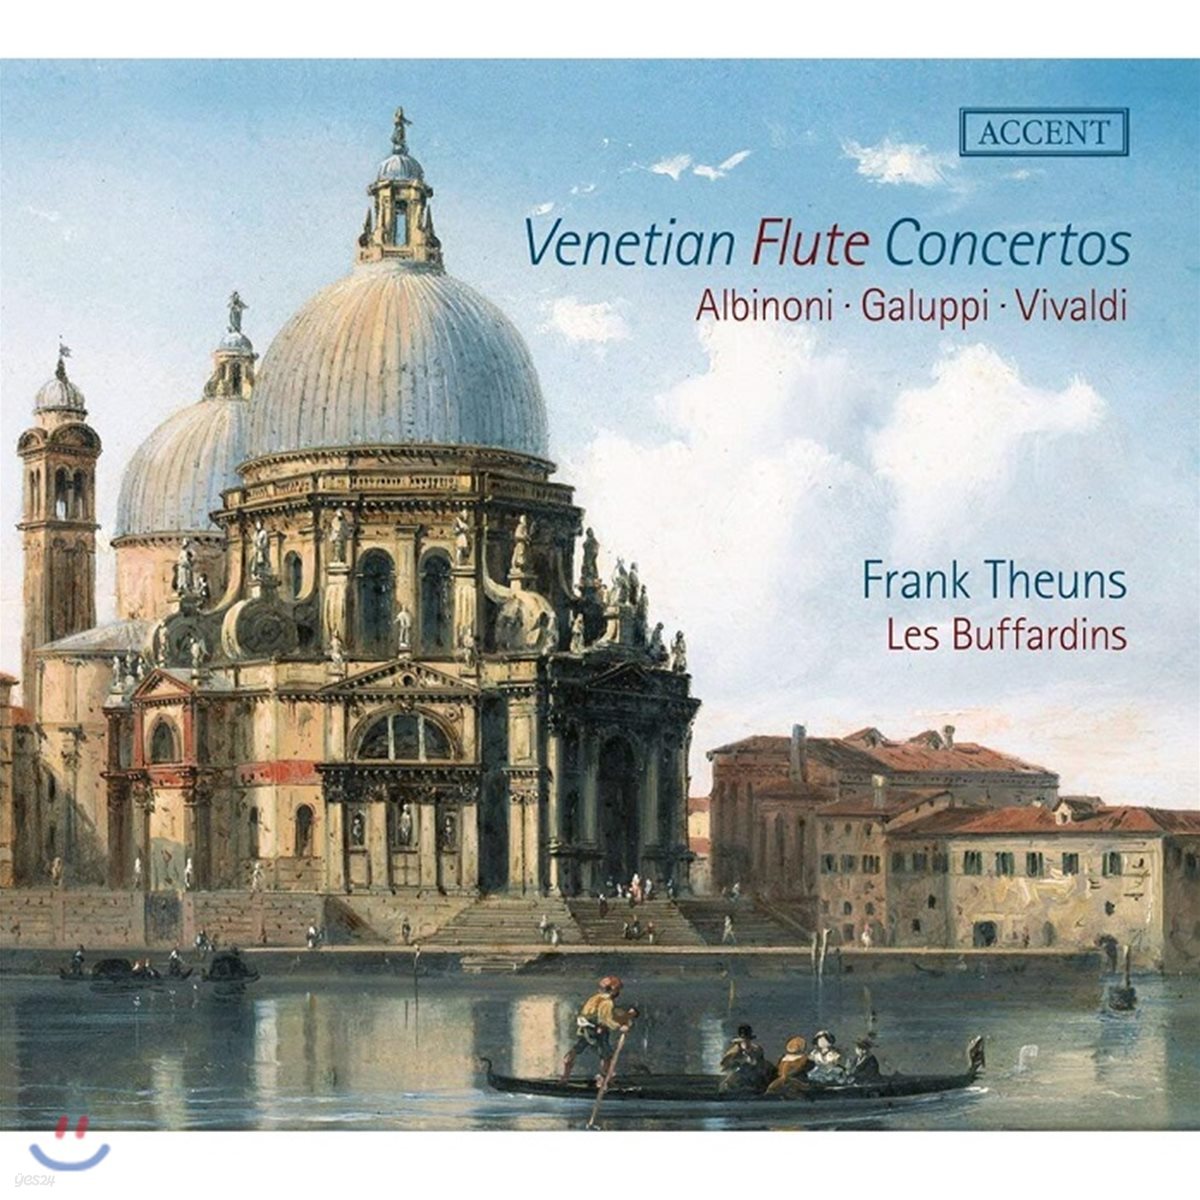 Frank Theuns 베네치아 플루트 협주곡 작품집 - 비발디, 갈루피, 알비노니 작품들 (Venetian Flute Concertos)